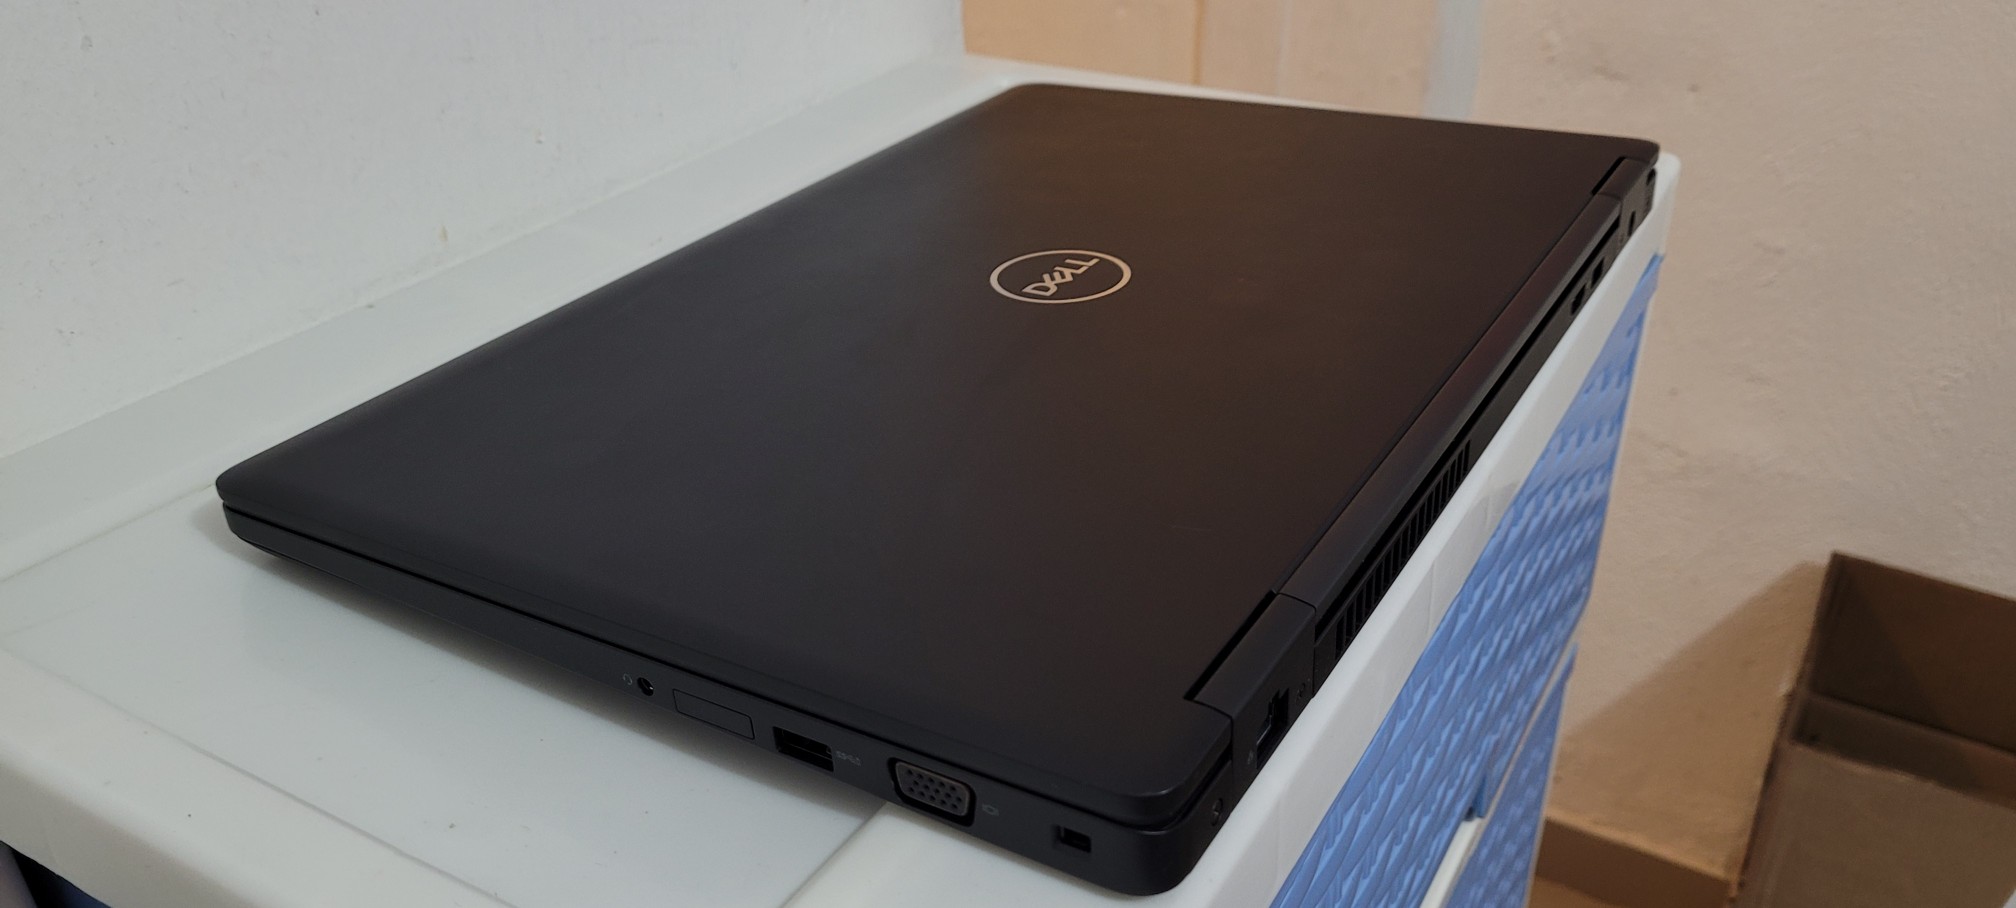 computadoras y laptops - Dell de 17 Pulg 5590 Core i7 8va Gen Ram 16gb Disco 512gb Nvidea 2gb Dedicada 2